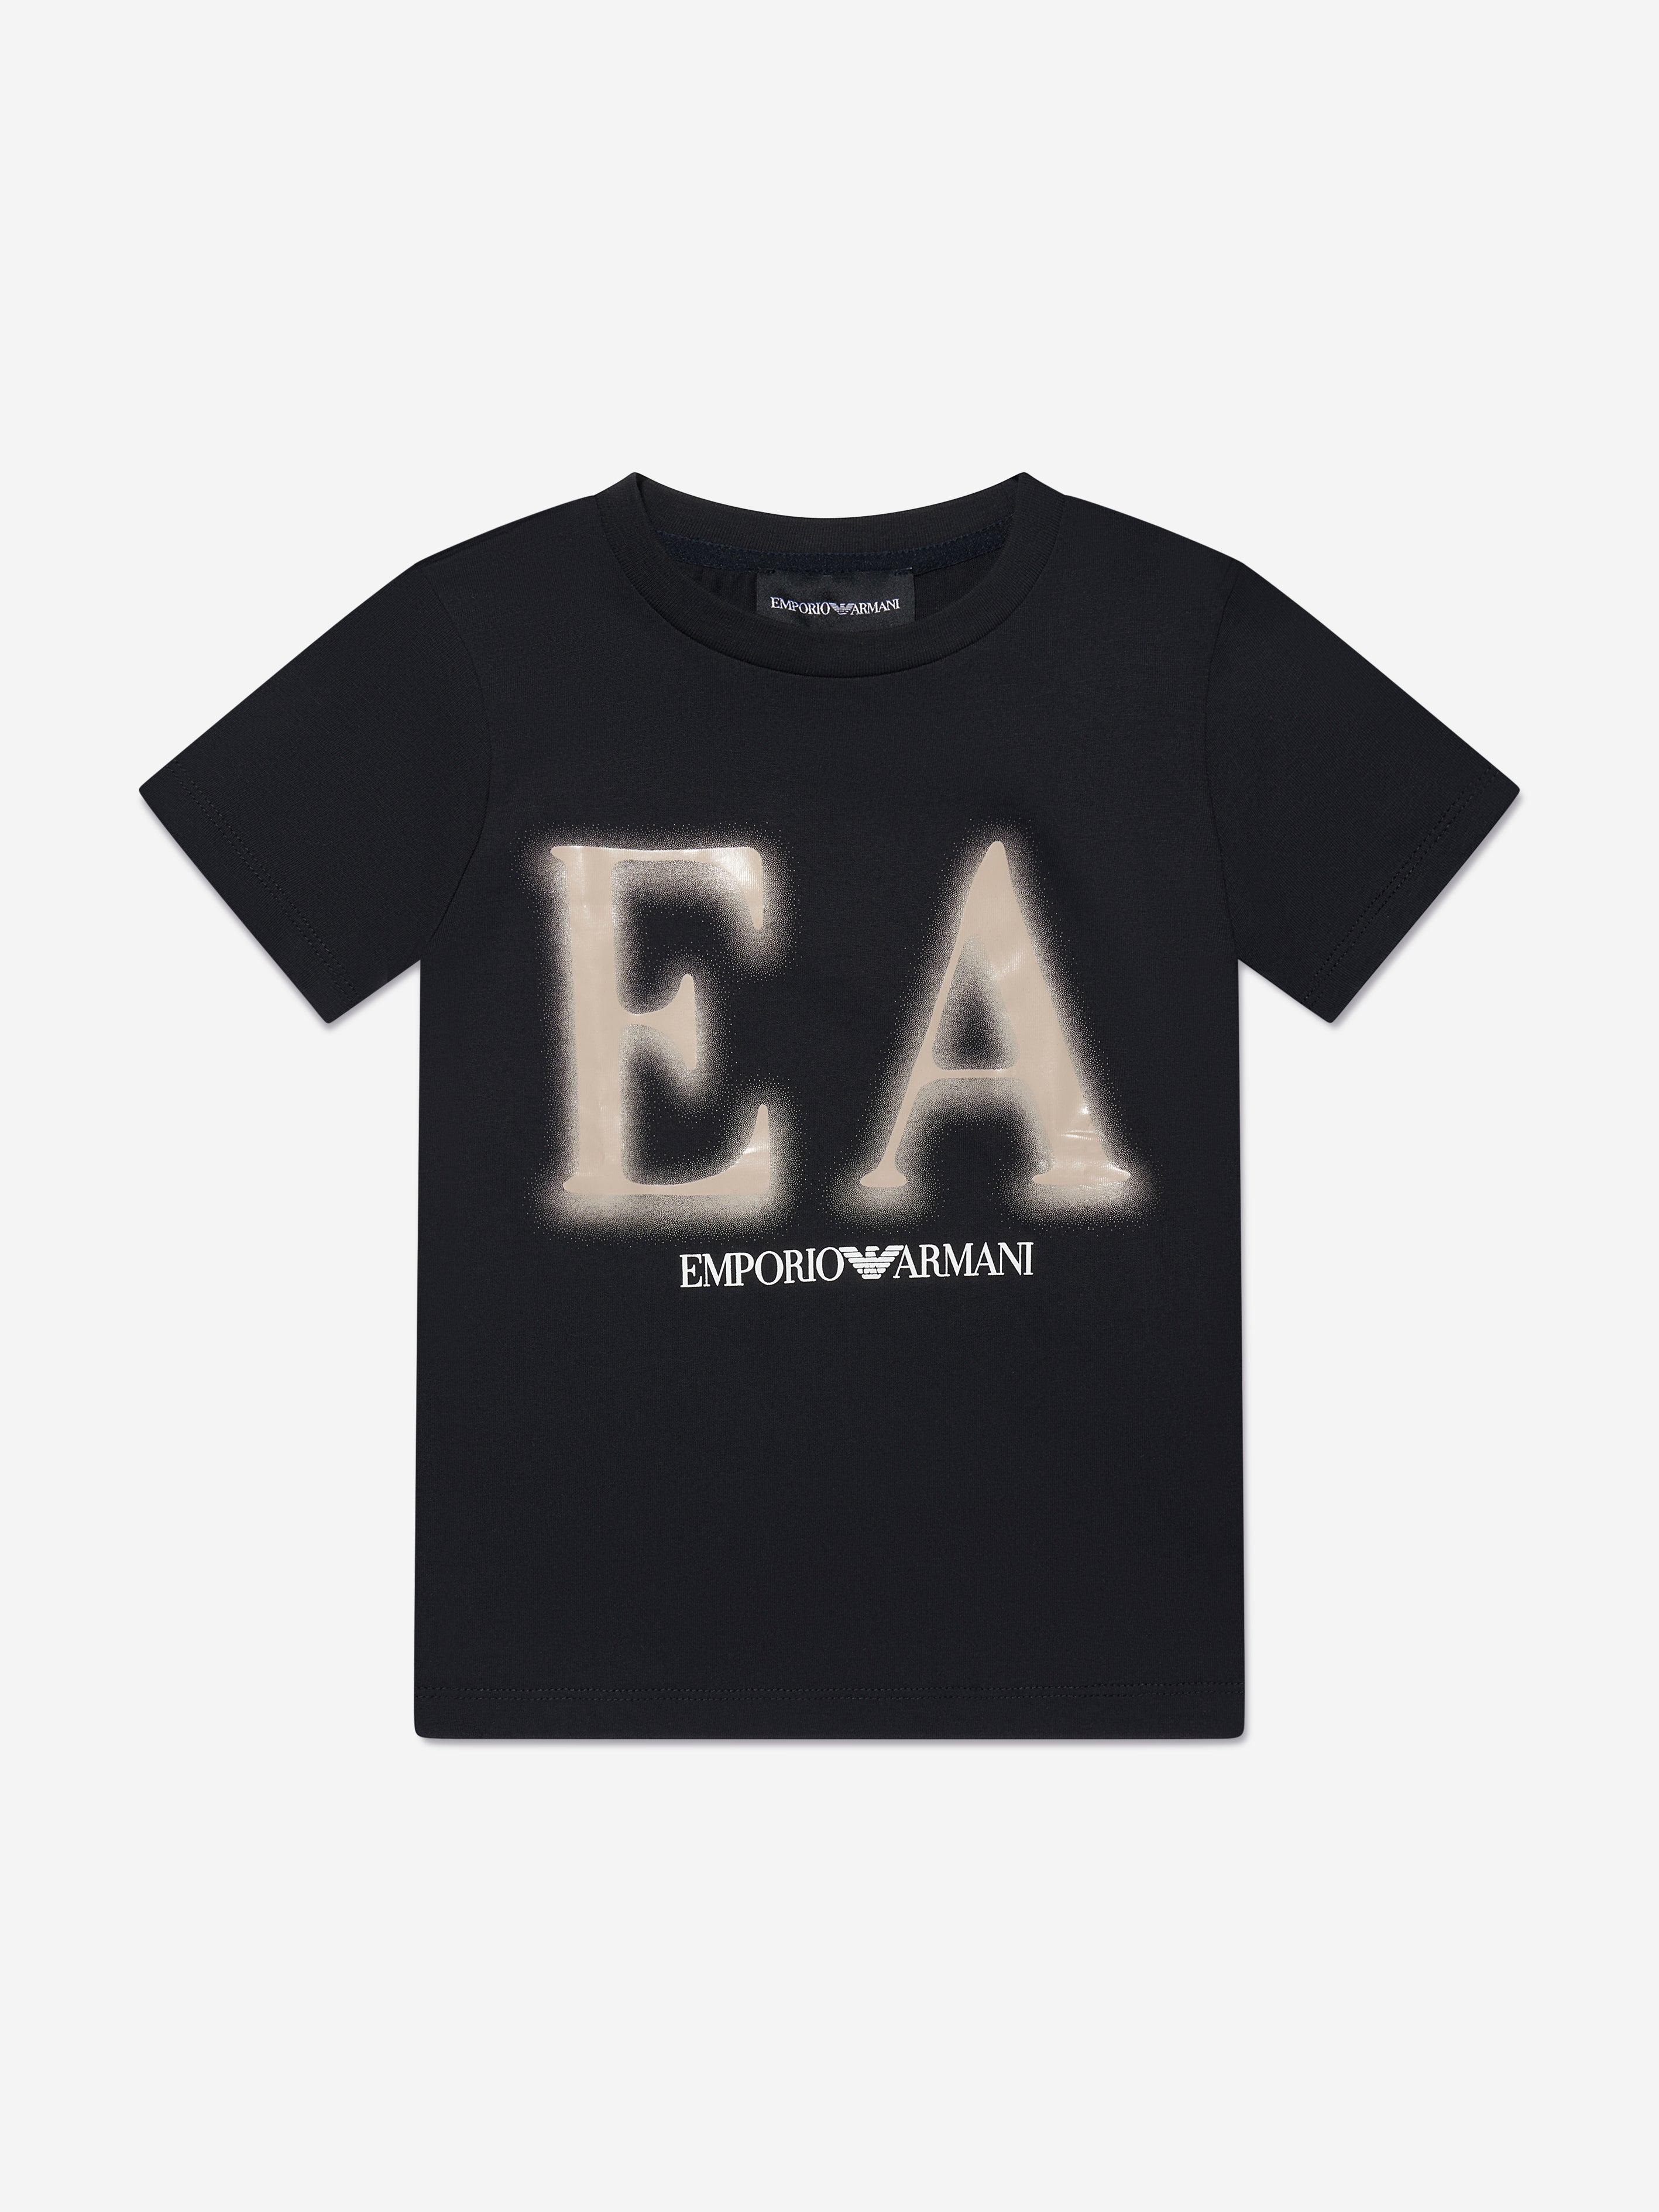 Emporio Armani Boys Logo T-Shirt in Navy | Childsplay Clothing